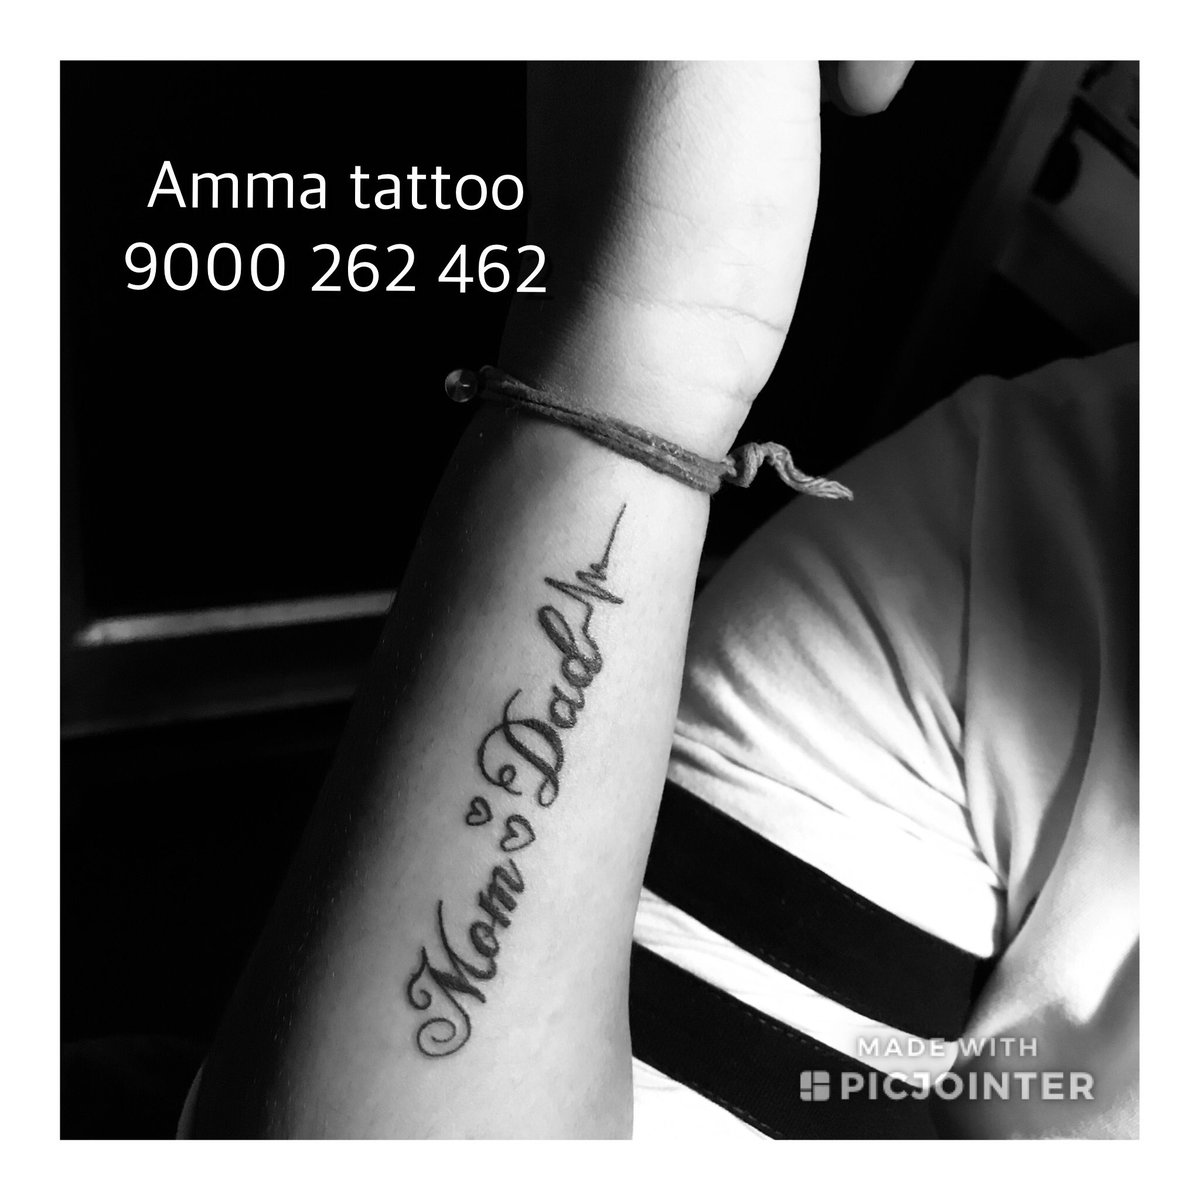 SivaKumar S Stay Safe on Twitter அபப  Tamil Tattoo Design appa  அபப tamil typo typography tattoo design art love sivadigitalart  httpstcoUCnJAvIsym  Twitter